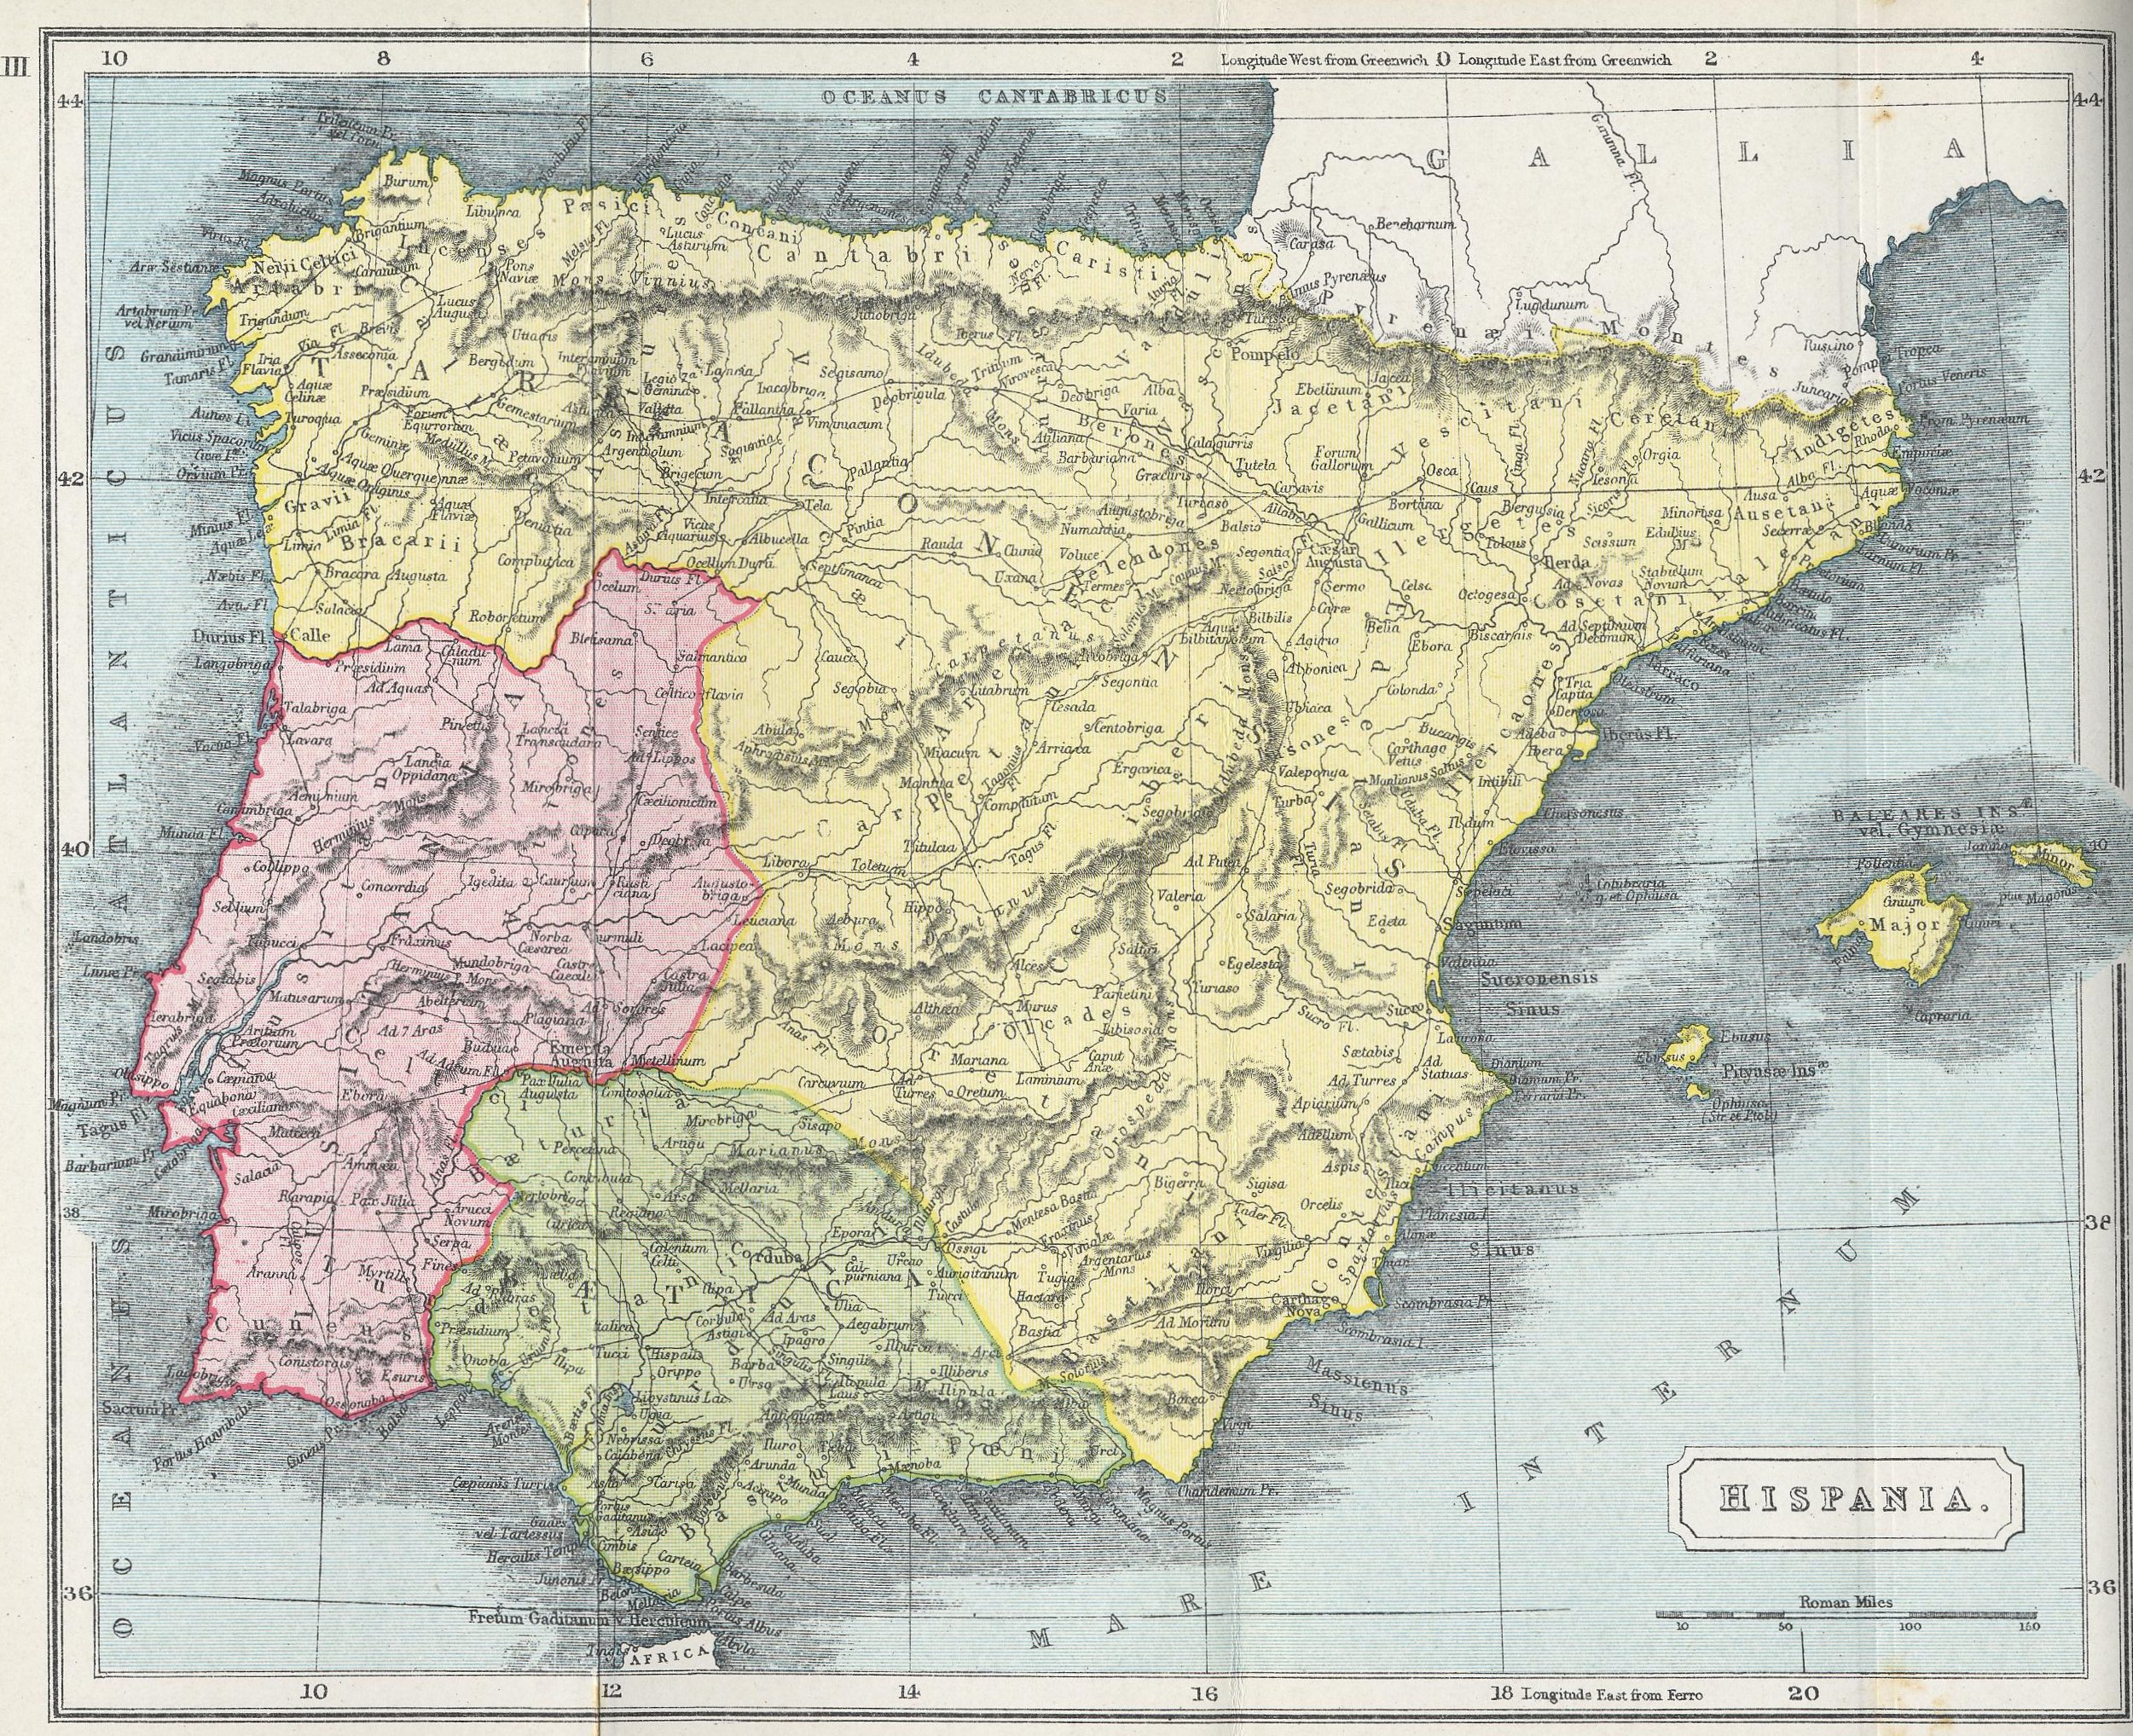 Map of Iberia70 BC - AD 180